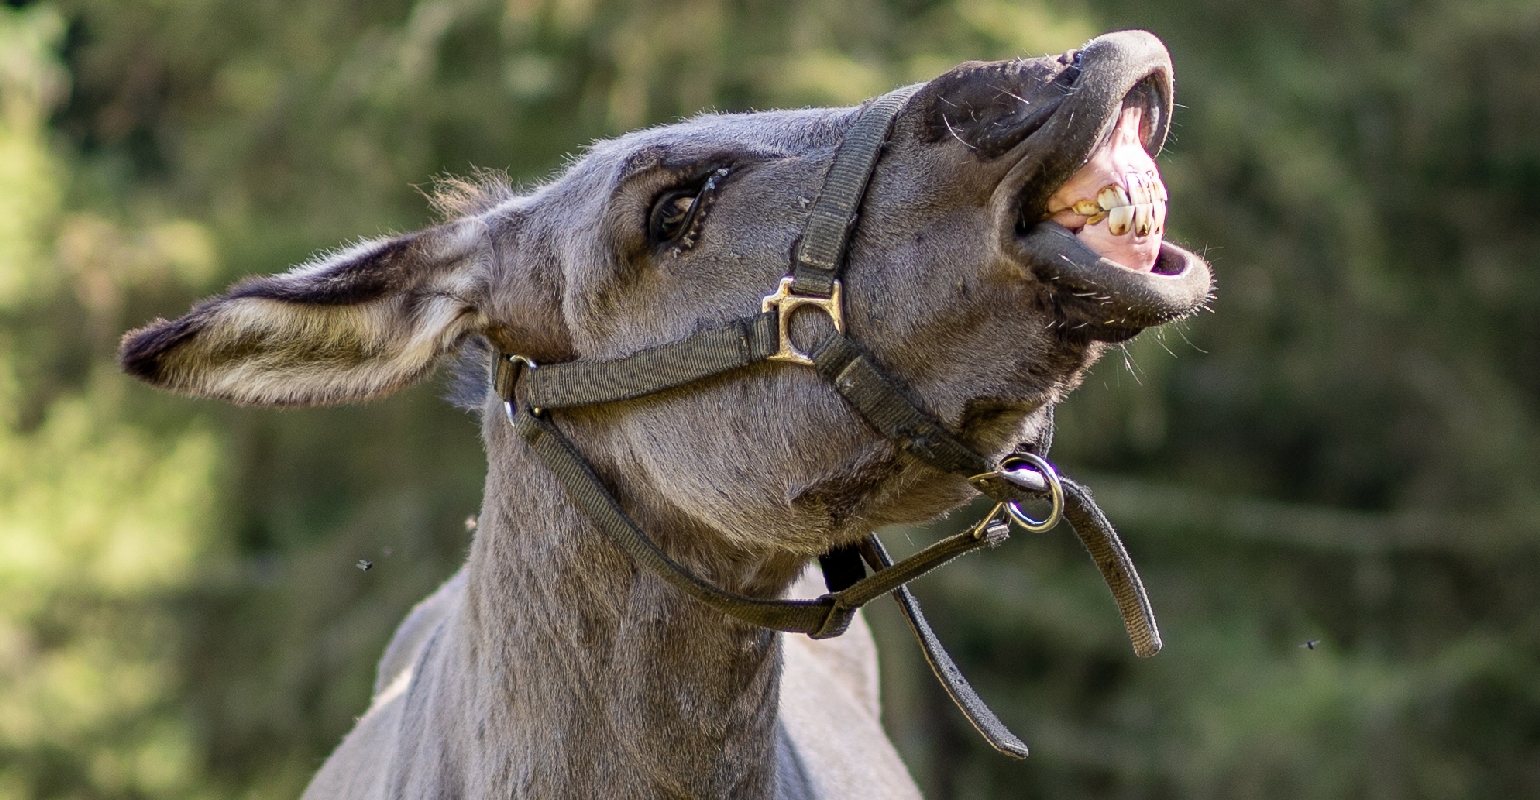 Donkeys: The epitome of stubborn